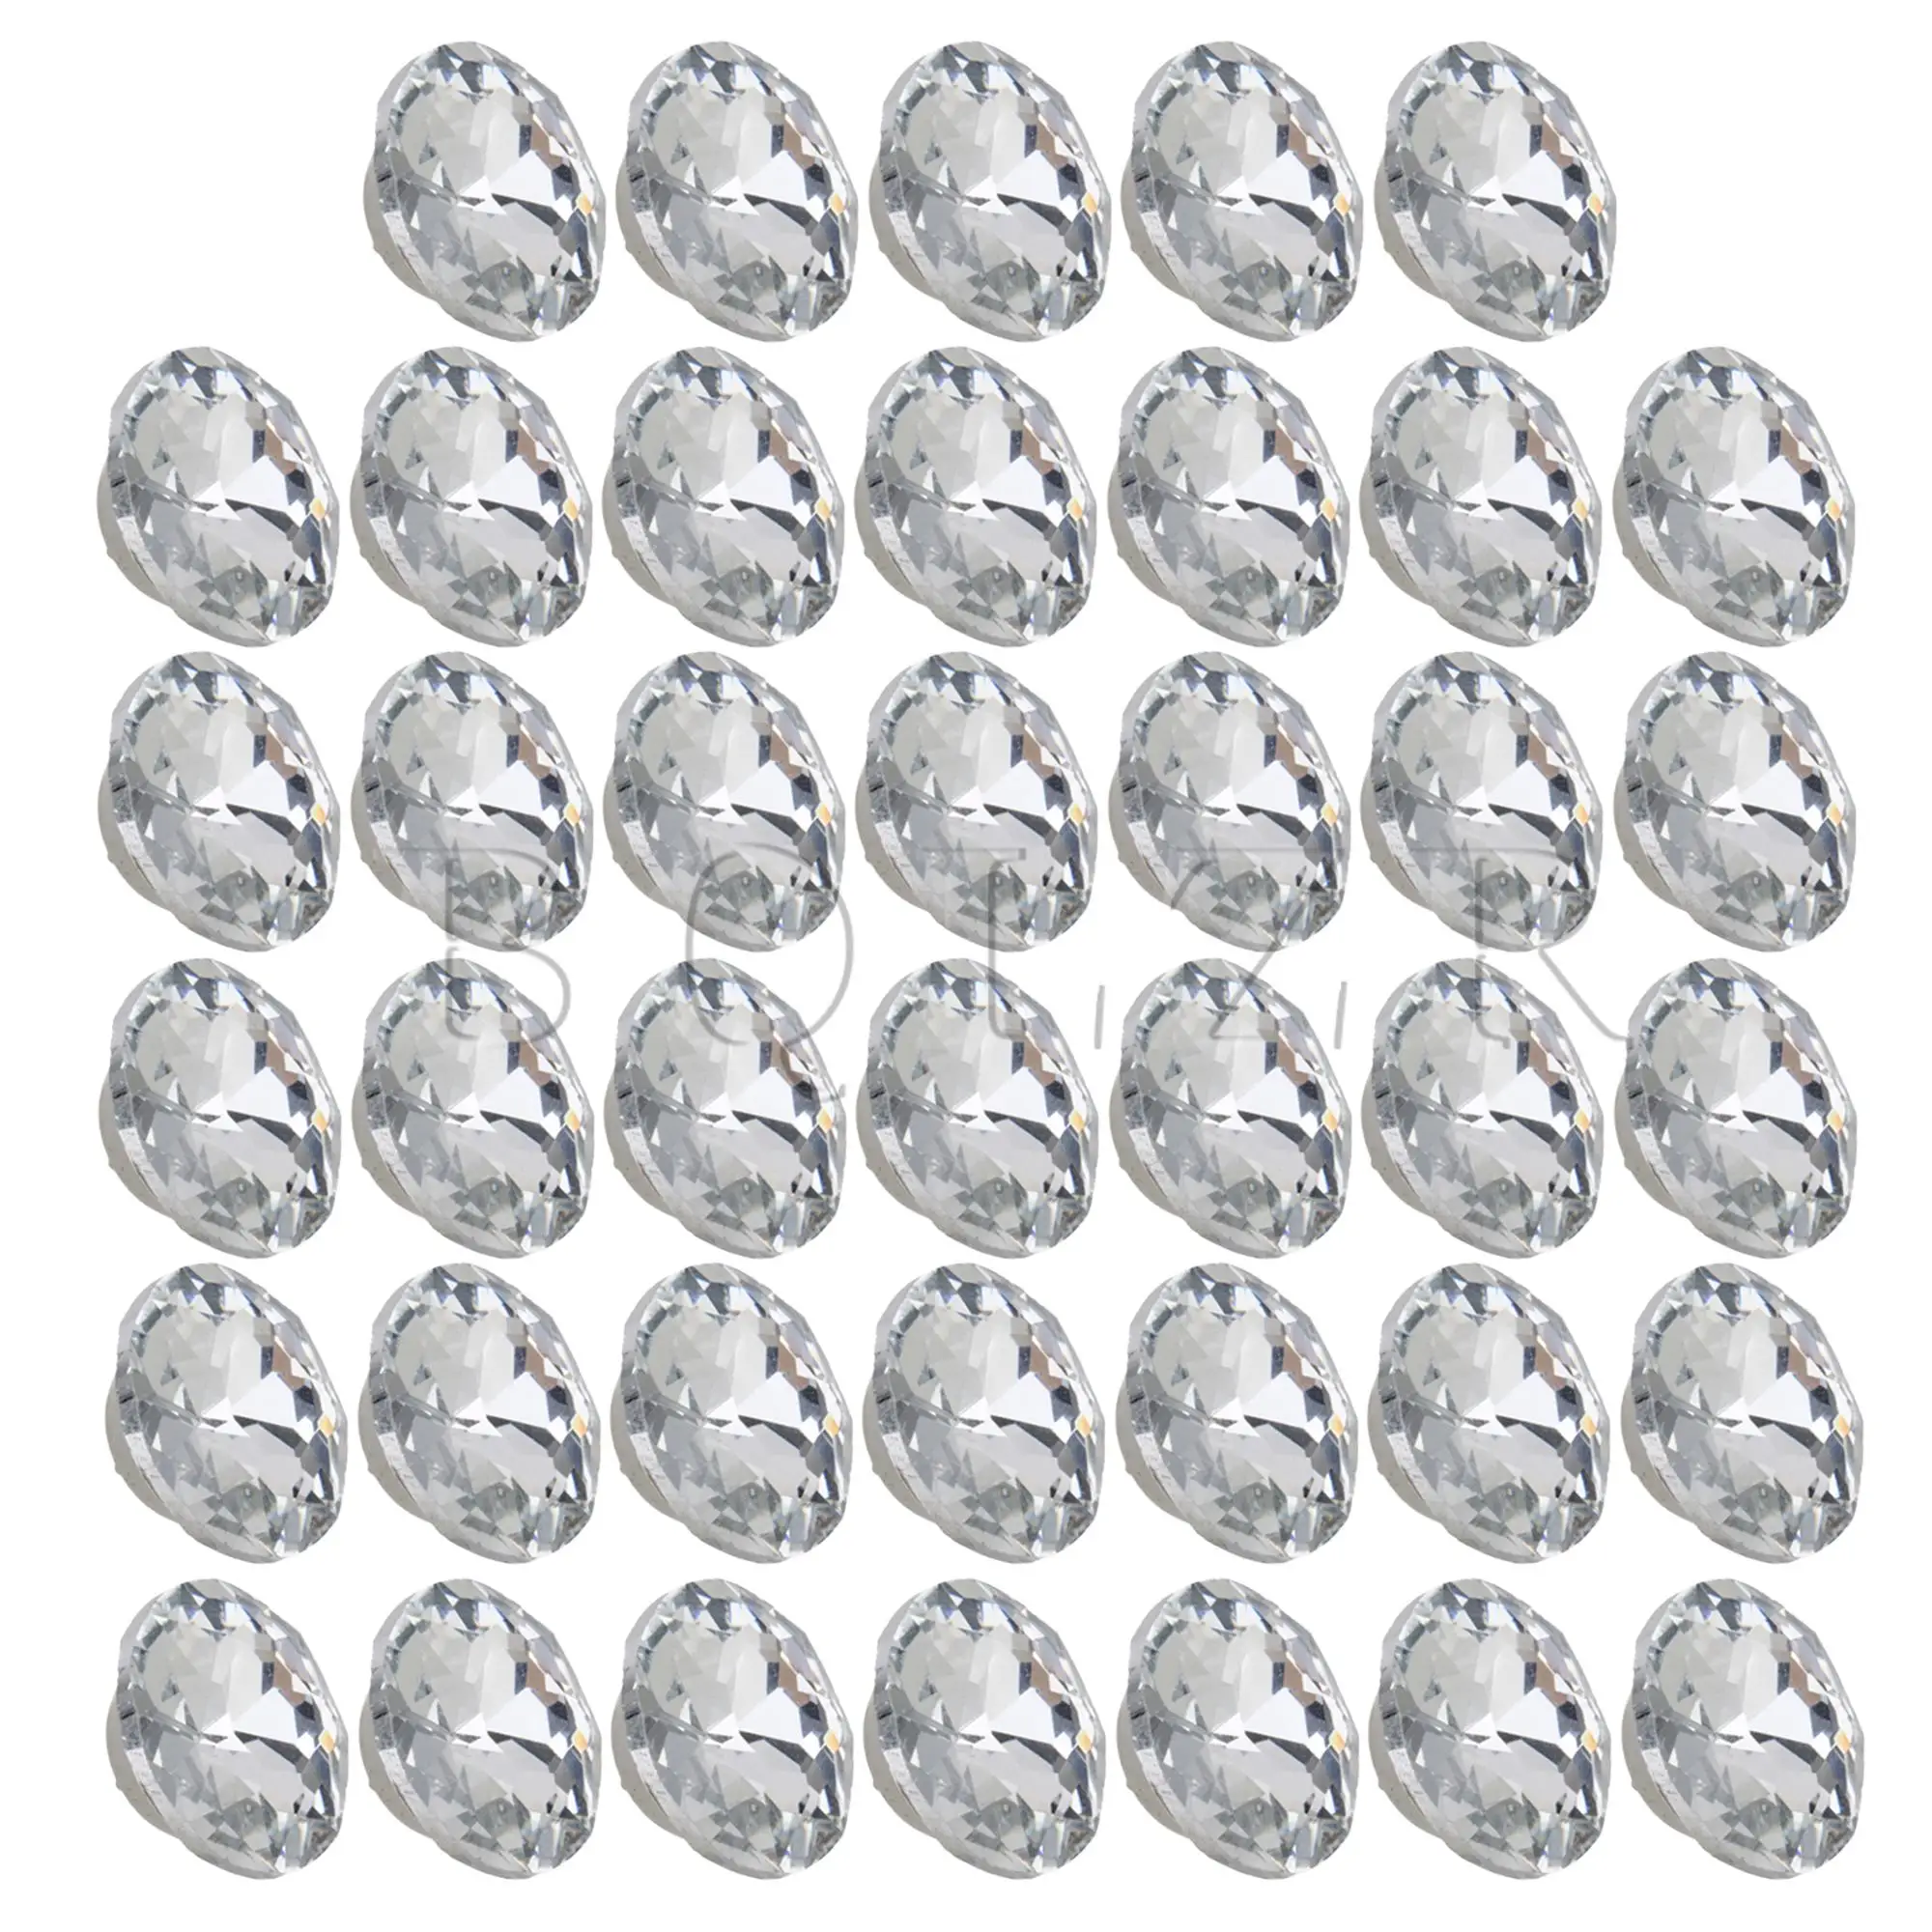 

BQLZR 40 Pieces Diamante Crystal Upholstery Sofa Headboard Buttons 22x16mm